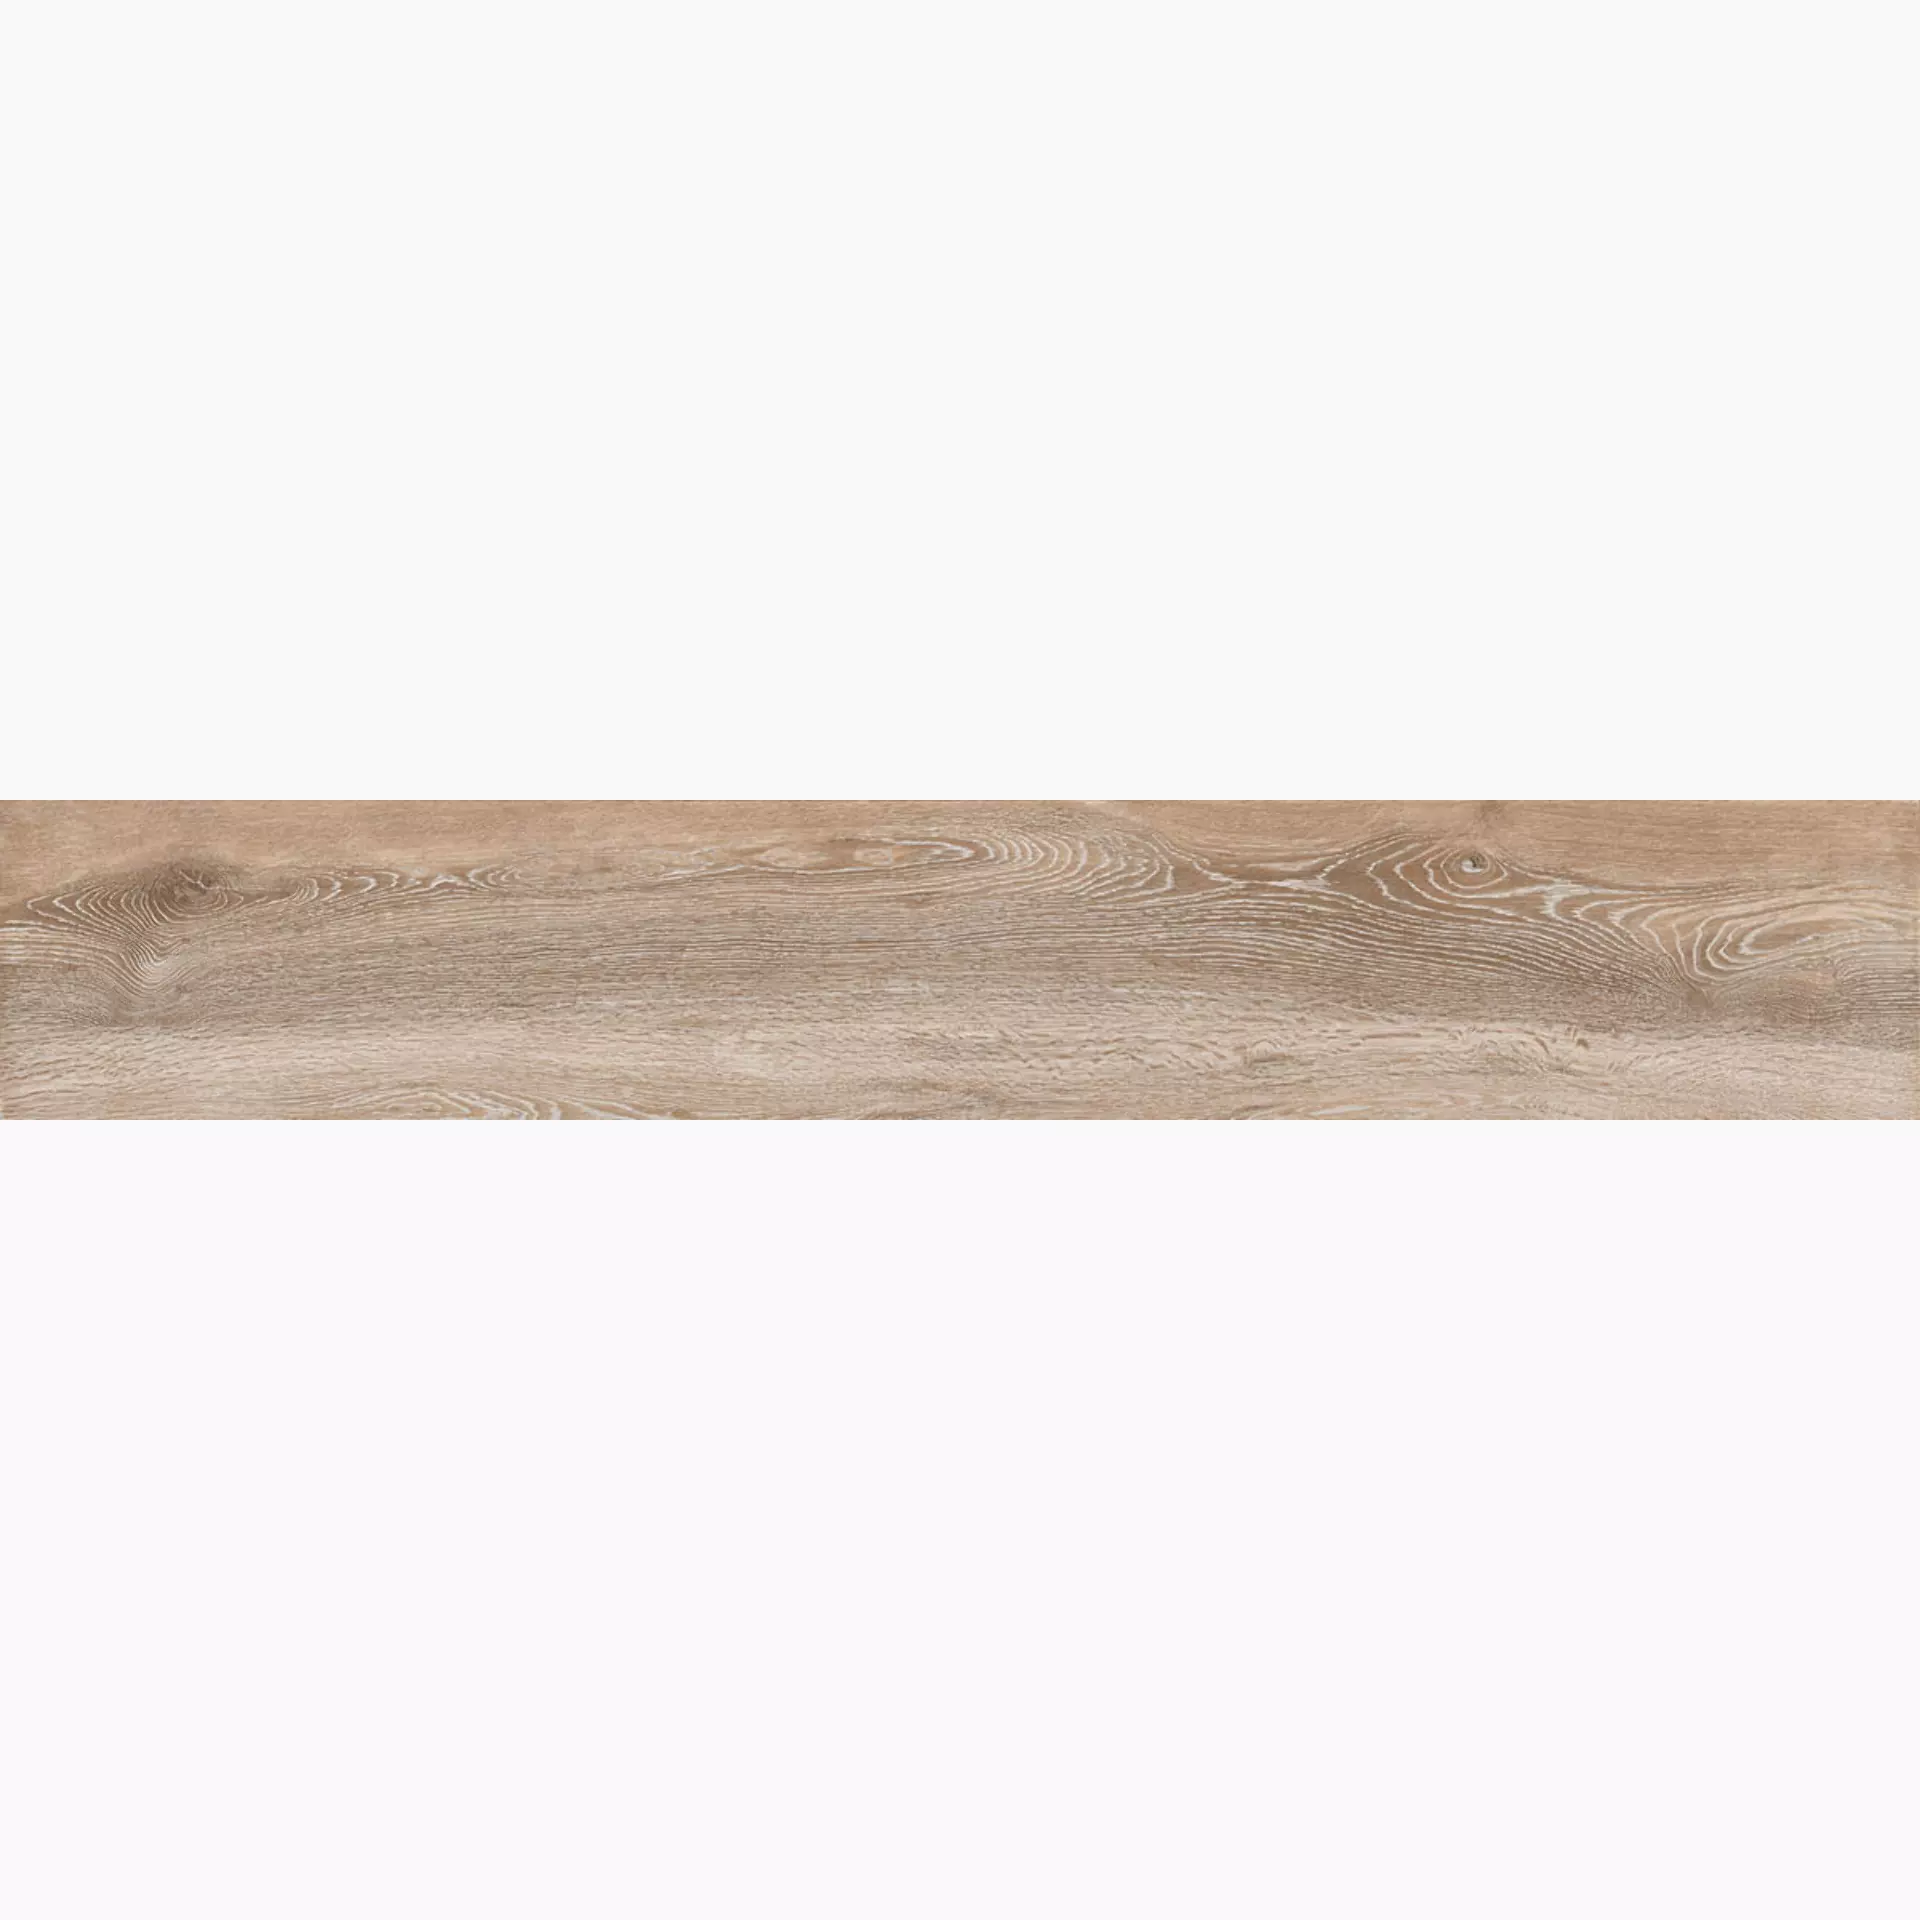 La Faenza Legno Dark Beige Natural Slate Cut Matt 168440 30x180cm rectified 10mm - LEGNO 3018BS RM